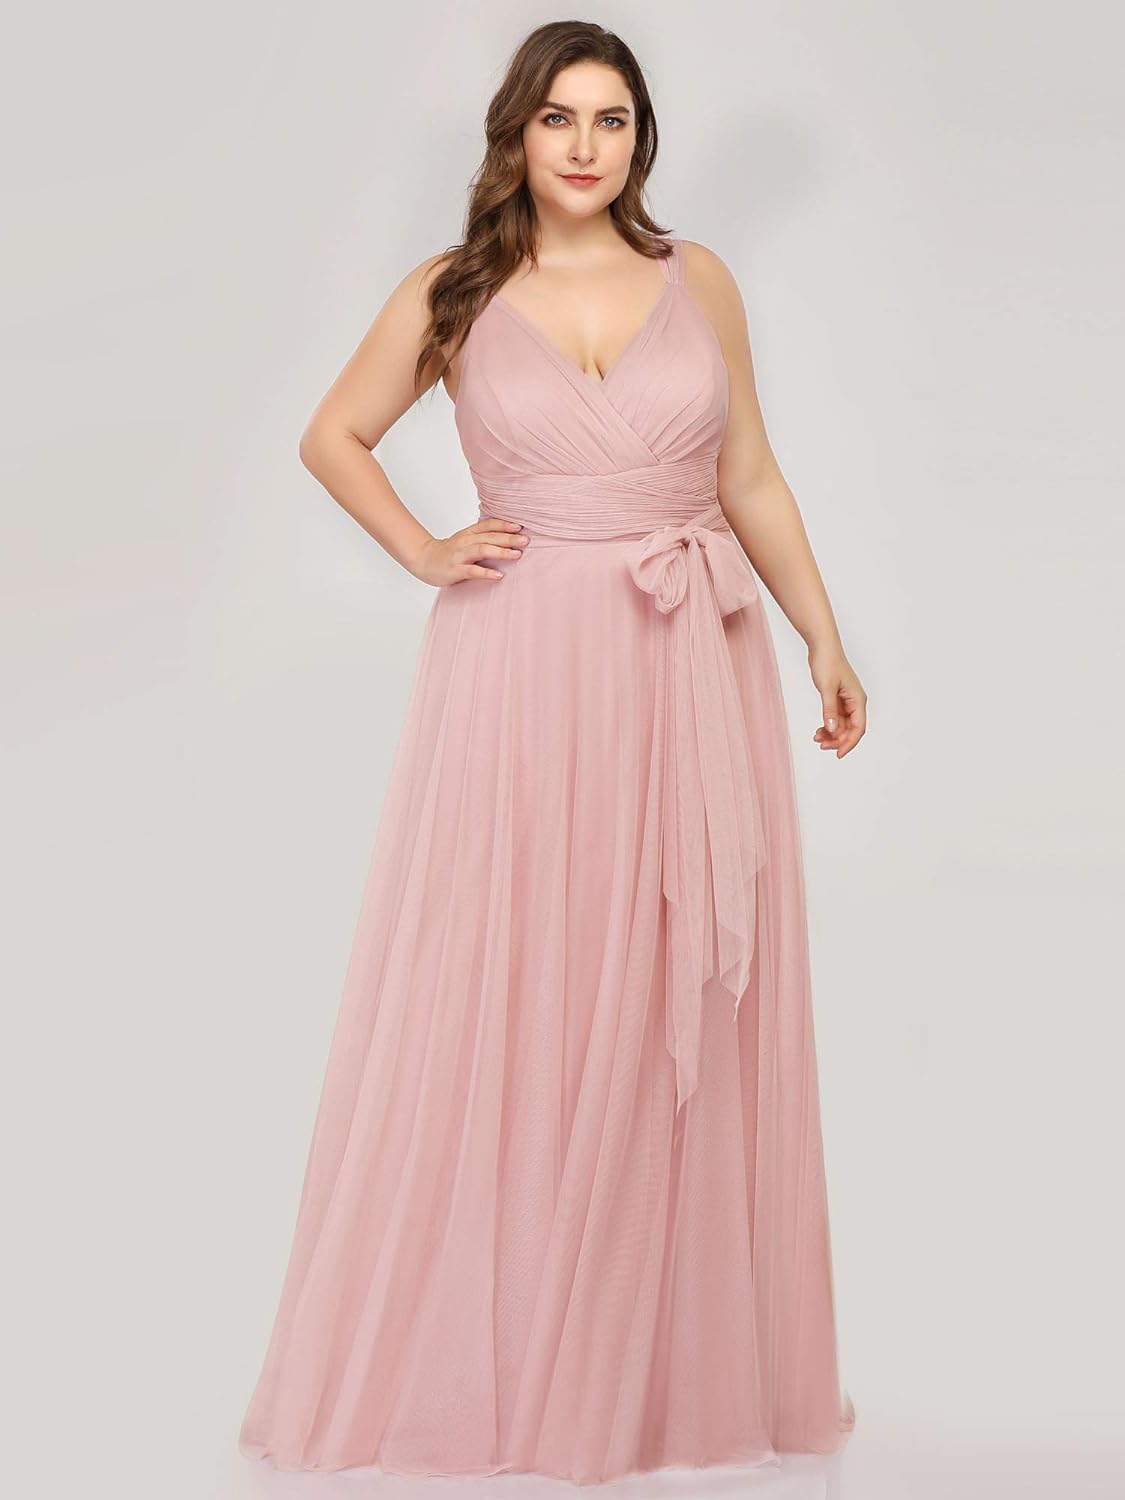 Elegant and Flattering: Ever-Pretty Plus Women's V-Neck Wrap Empire Waist Sash Tulle A-line Plus Size Bridesmaid Dresses 07303-DA Review